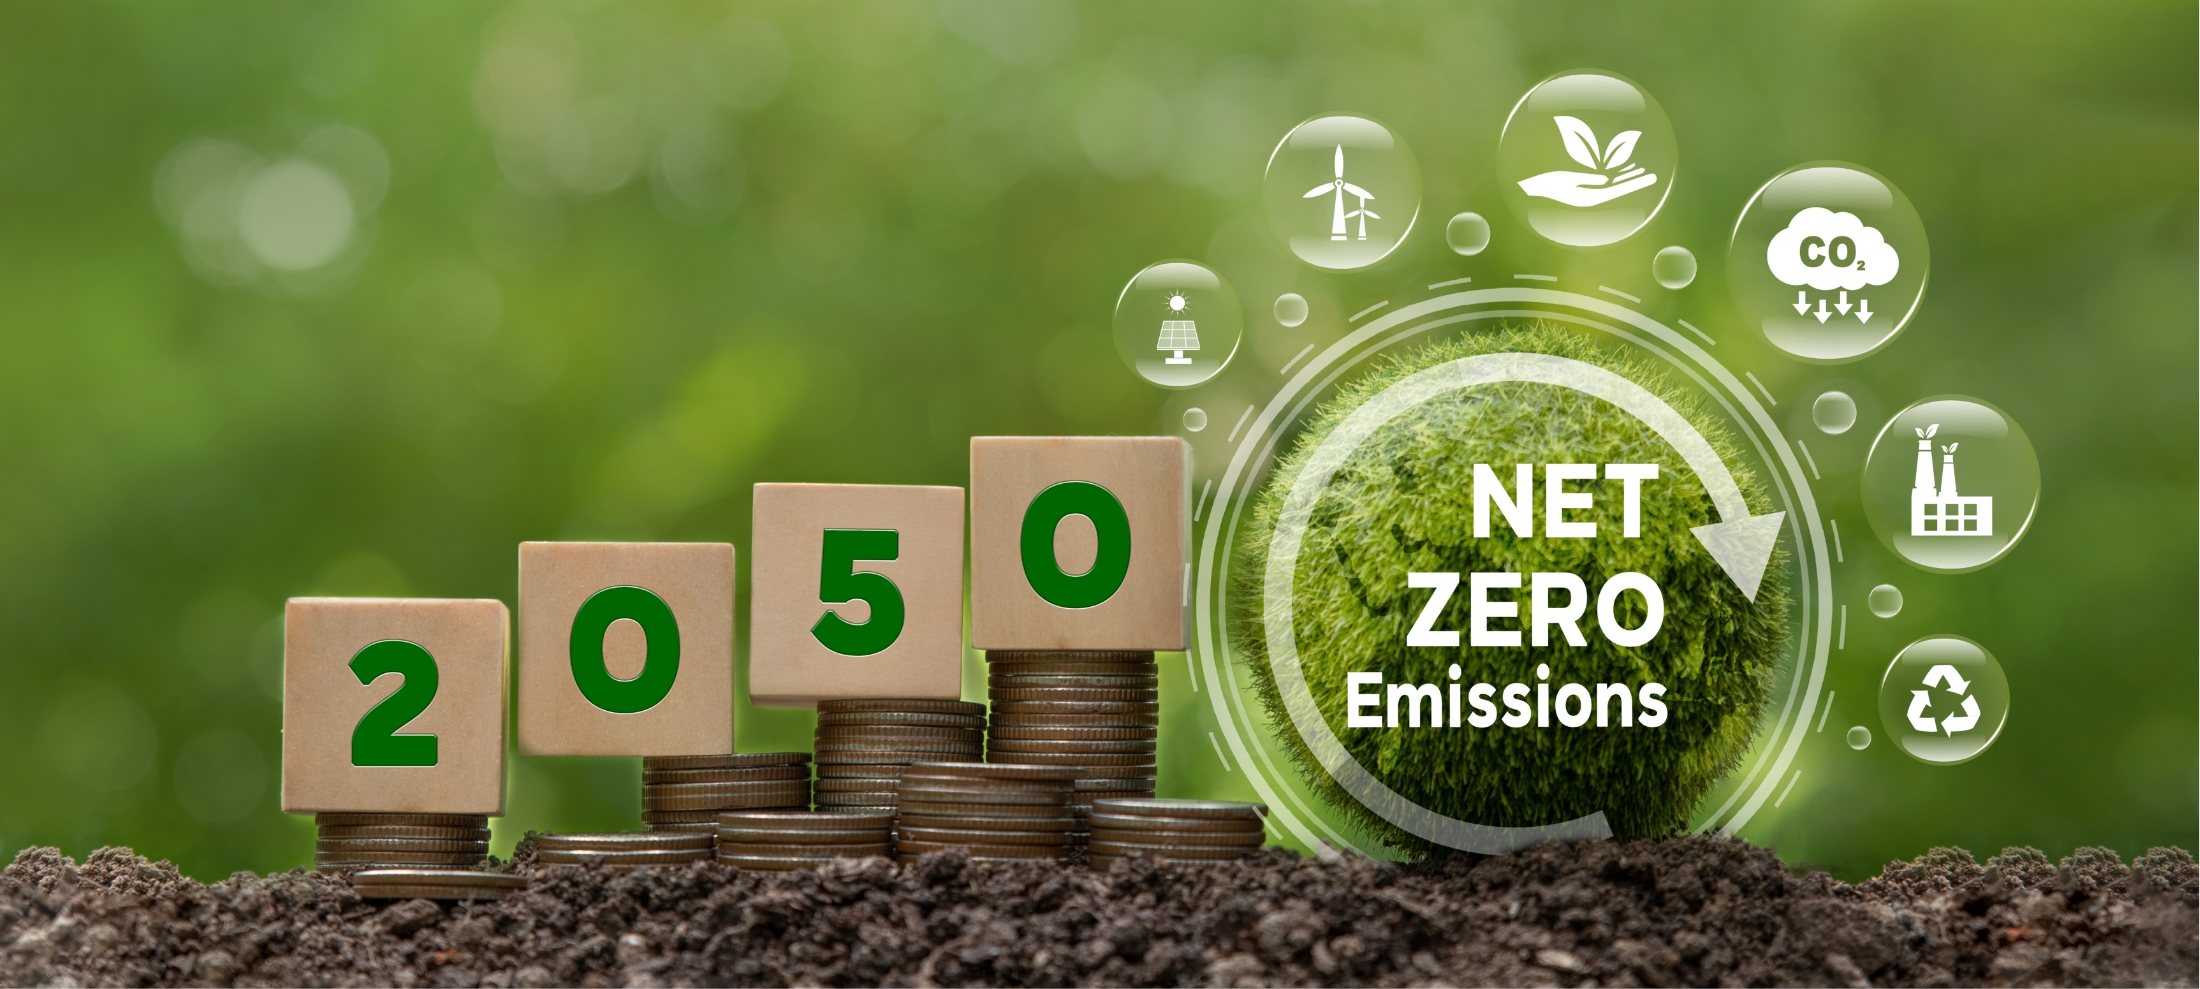 2050 NET ZORE Emissions